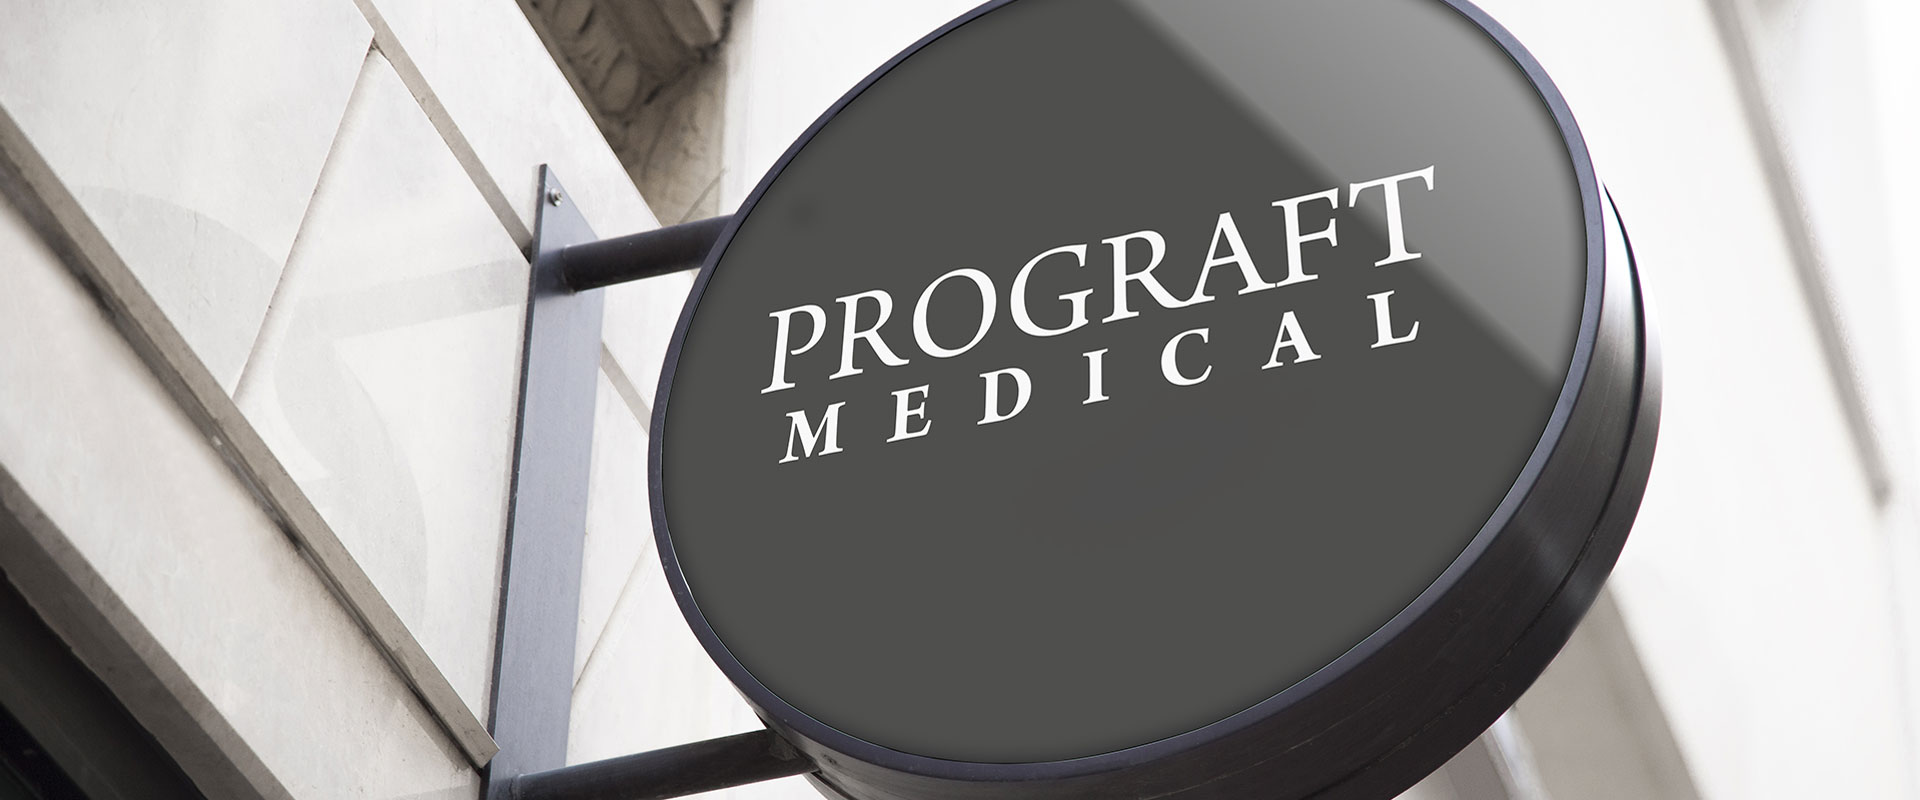 prograf-medical-tabela-logo